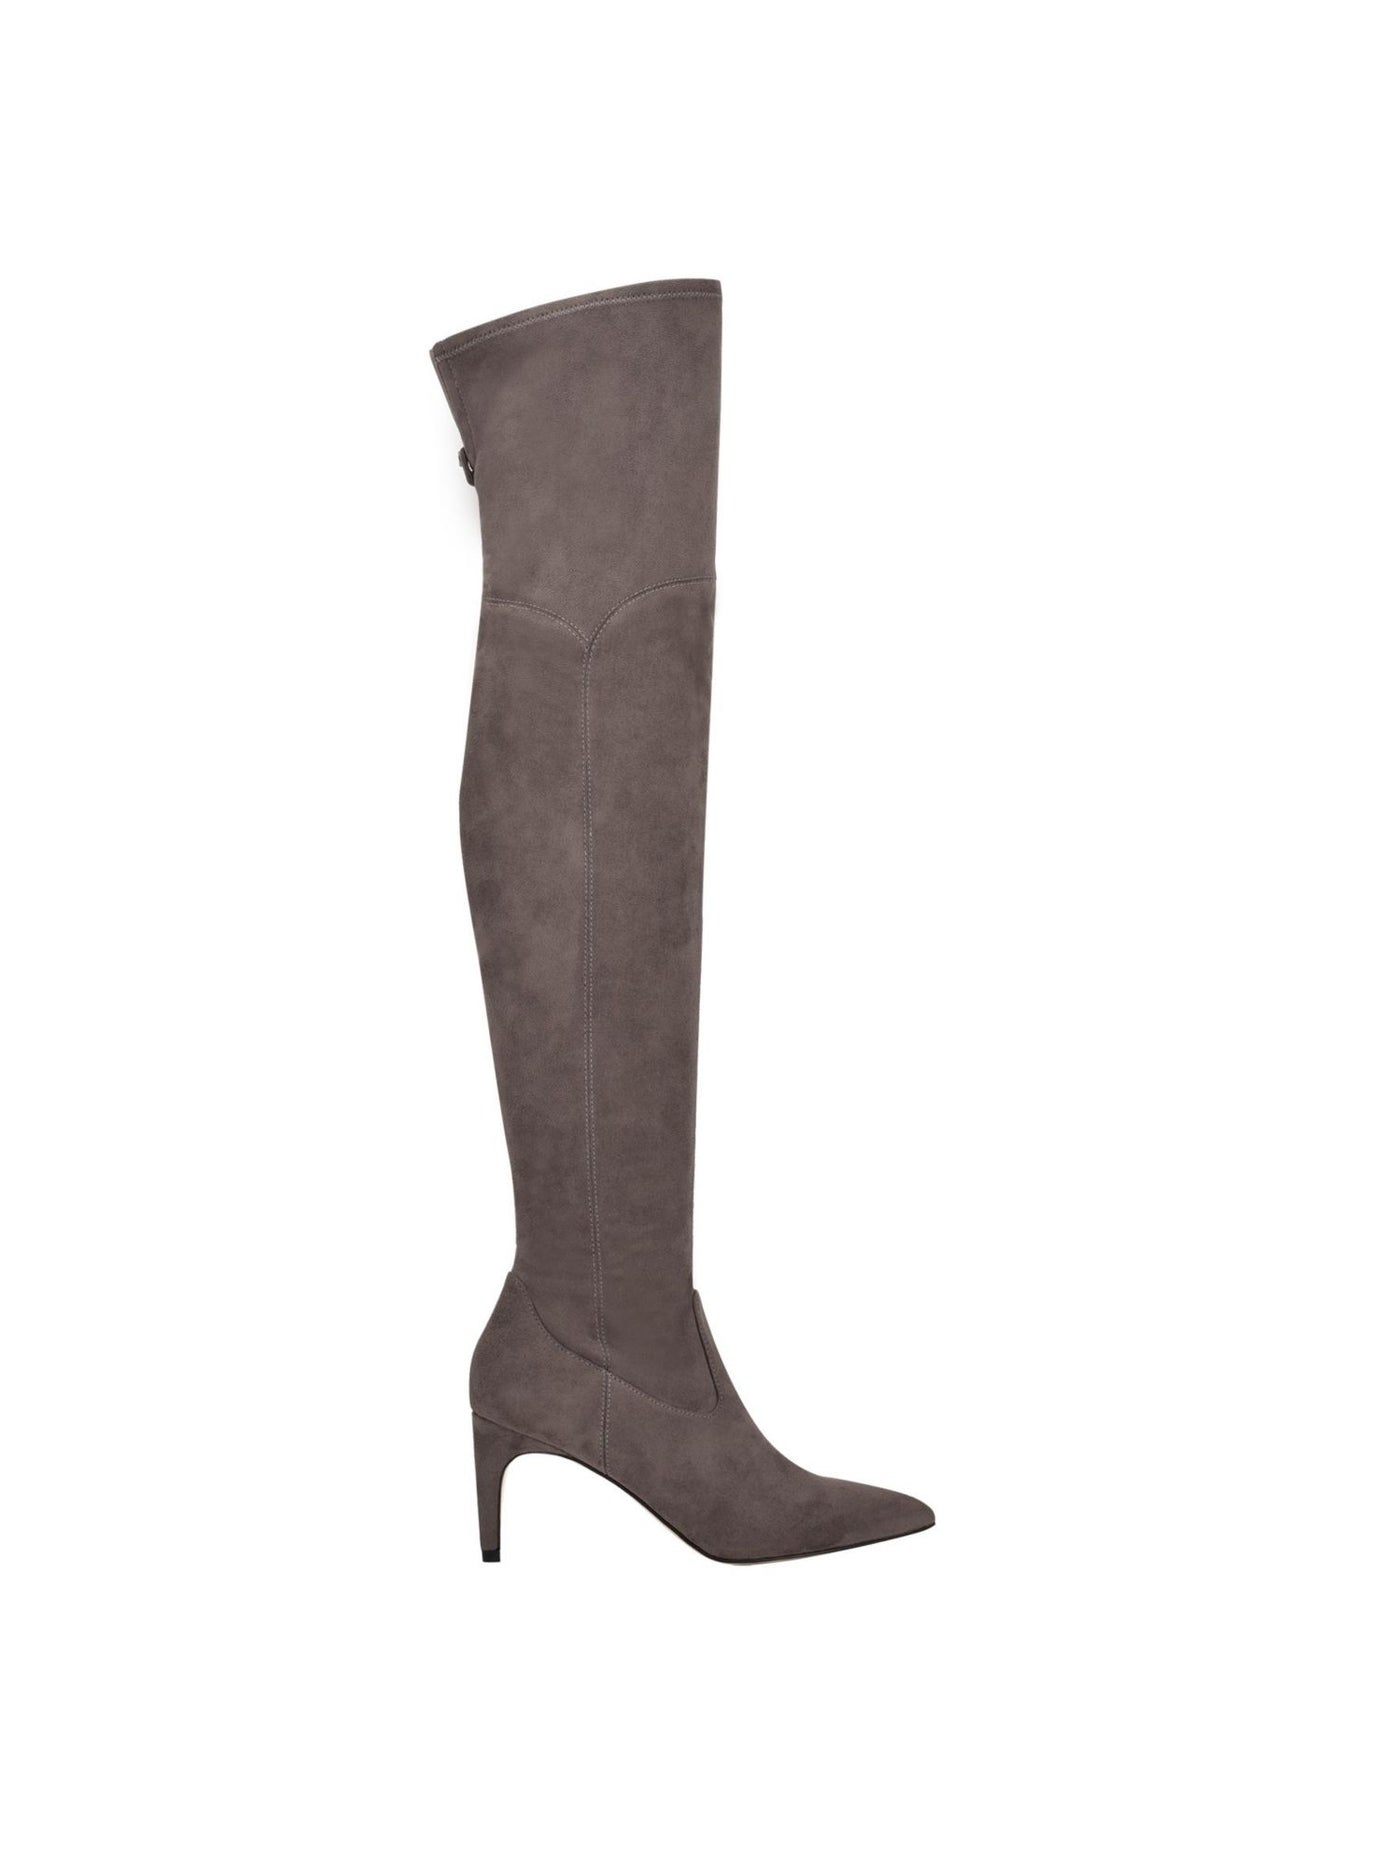 CALVIN KLEIN Womens Gray Goring Sacha Pointy Toe Stiletto Zip-Up Heeled Boots 9 M